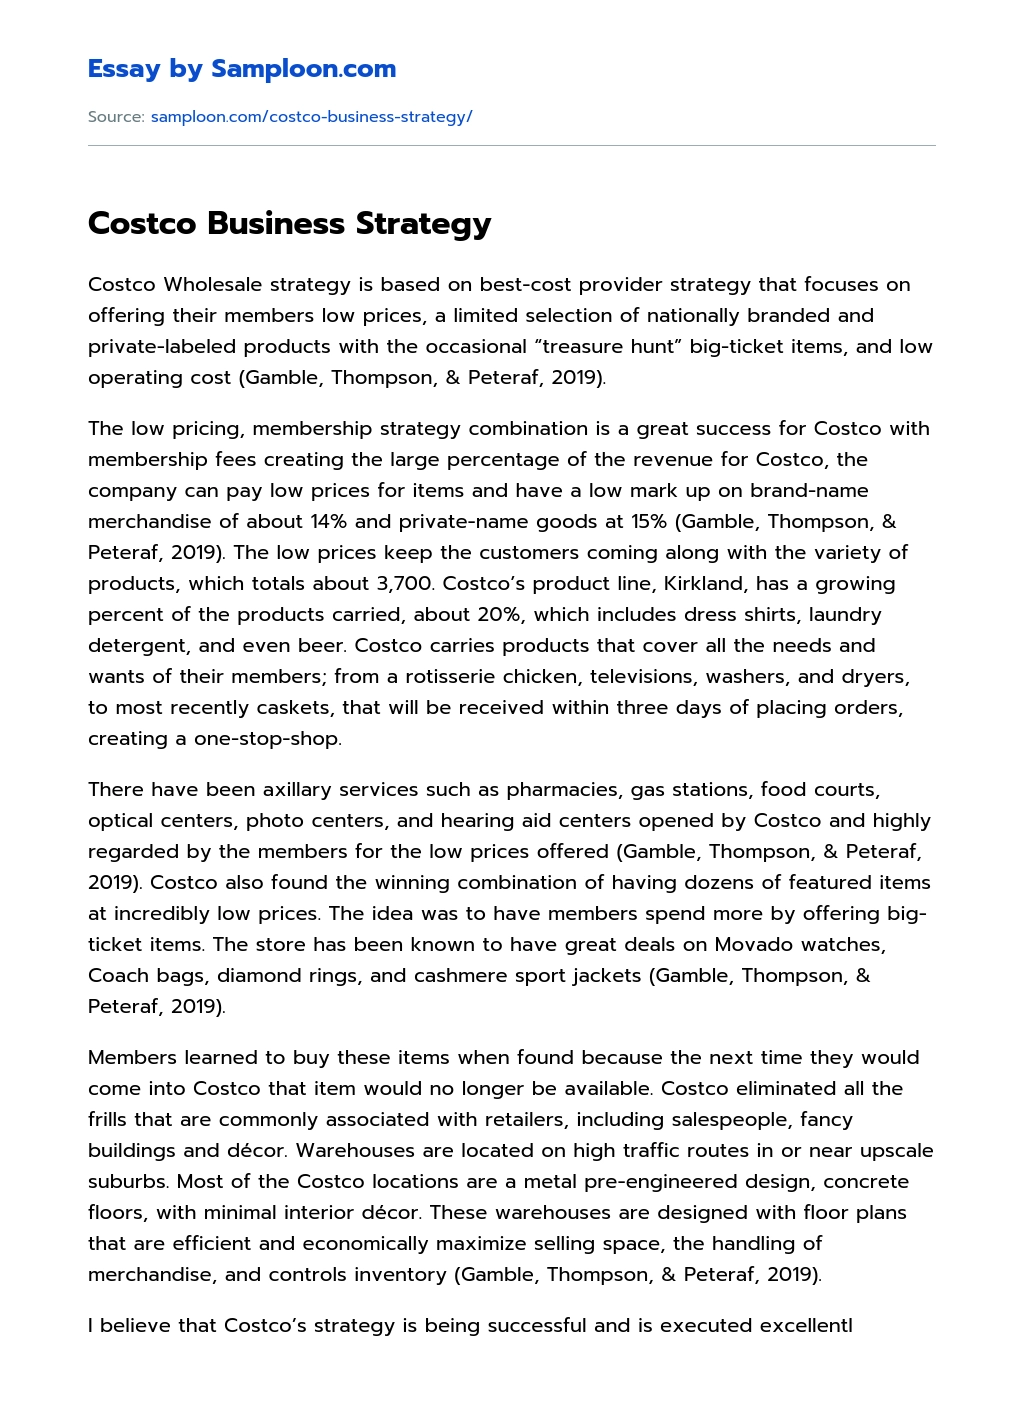 Costco Business Strategy essay